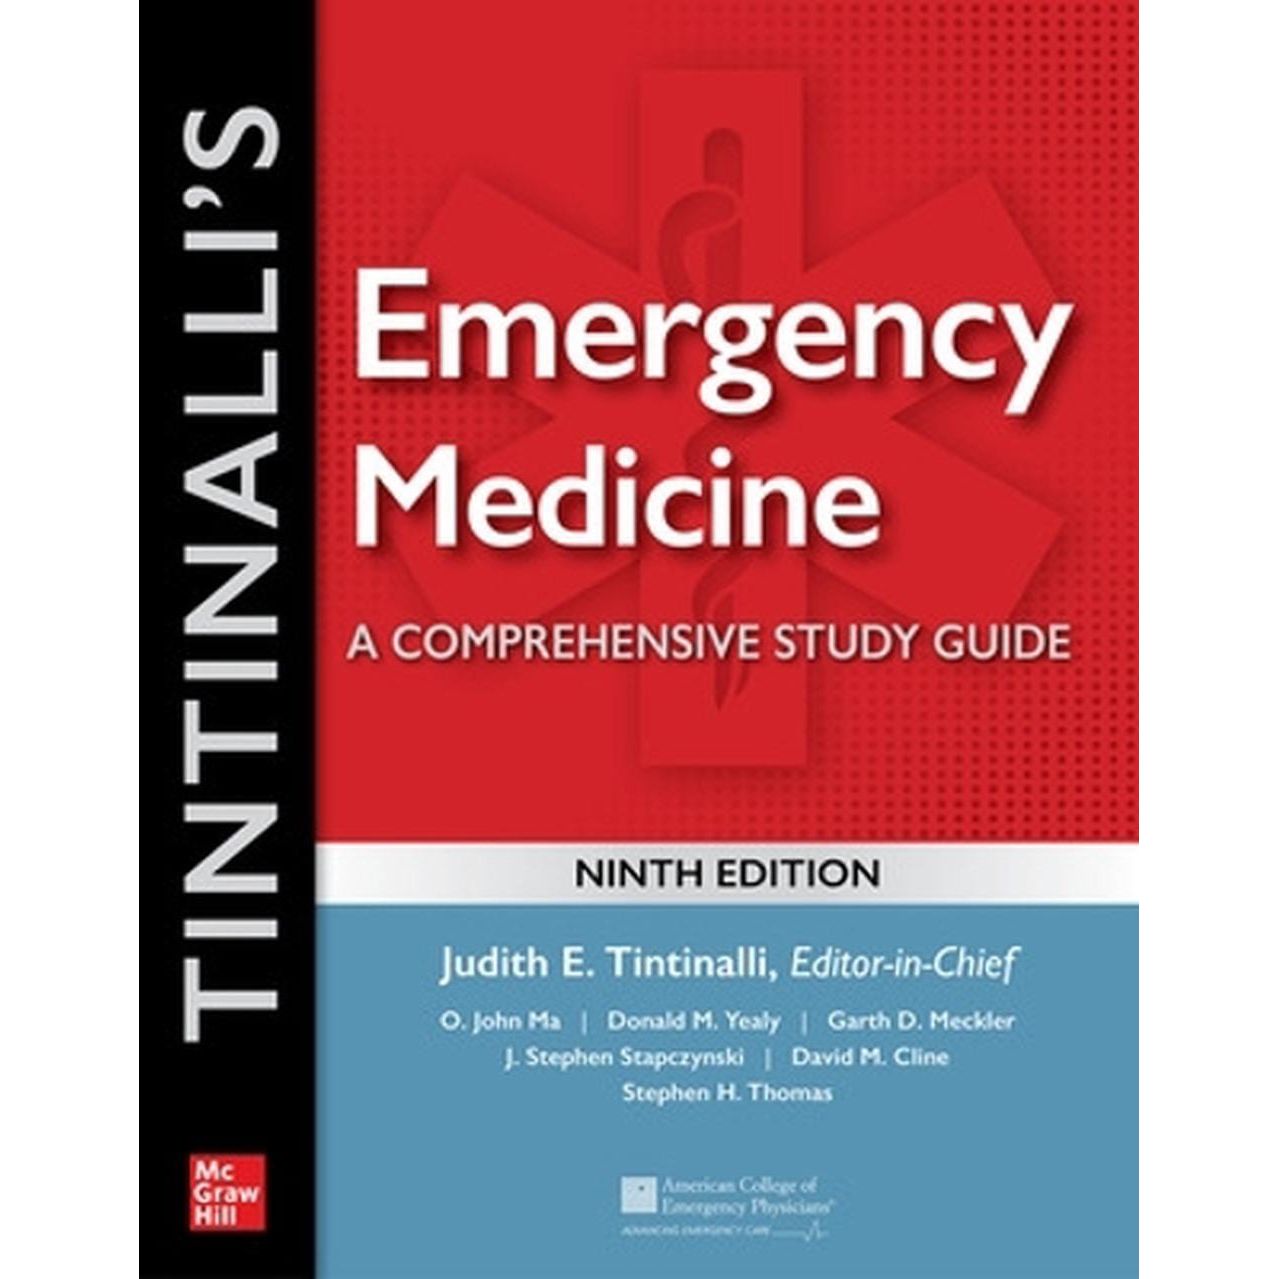 Paramedic Shop McGraw Hill Textbooks Tintinalli's Emergency Medicine: A Comprehensive Study Guide - 9th Edition